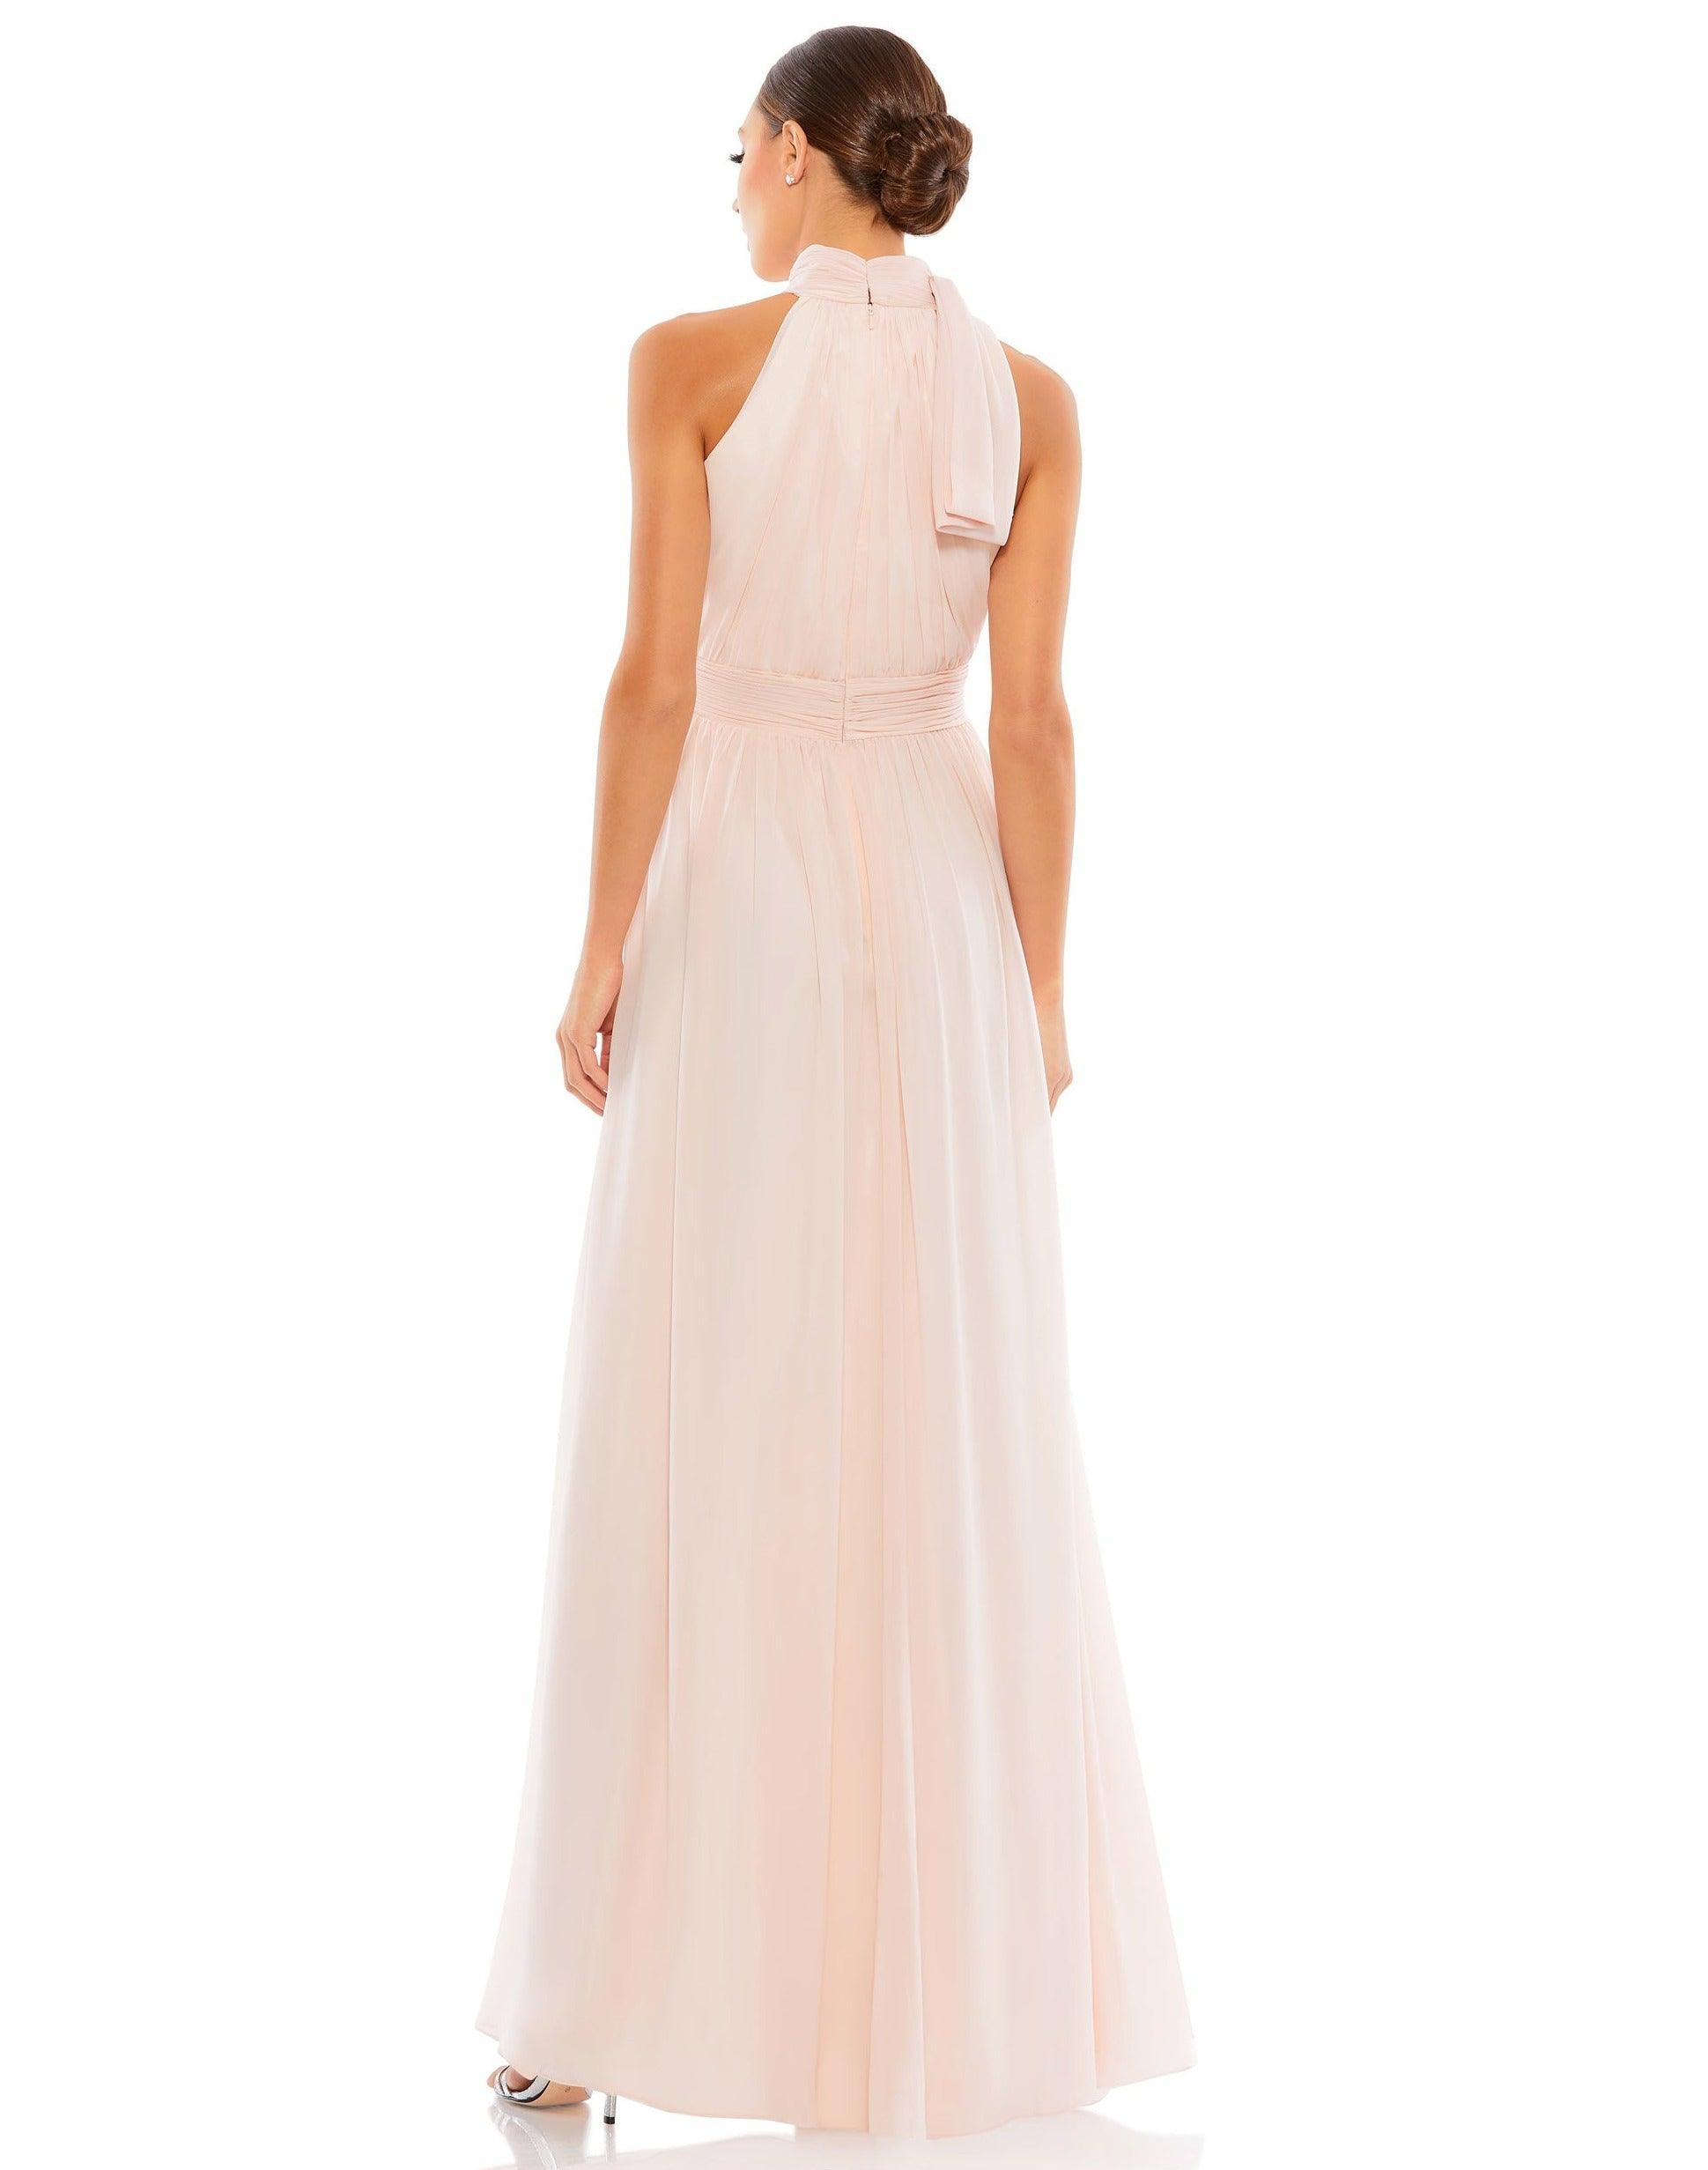 Mac Duggal Long Halter Chiffon Prom Dress 55035 - The Dress Outlet